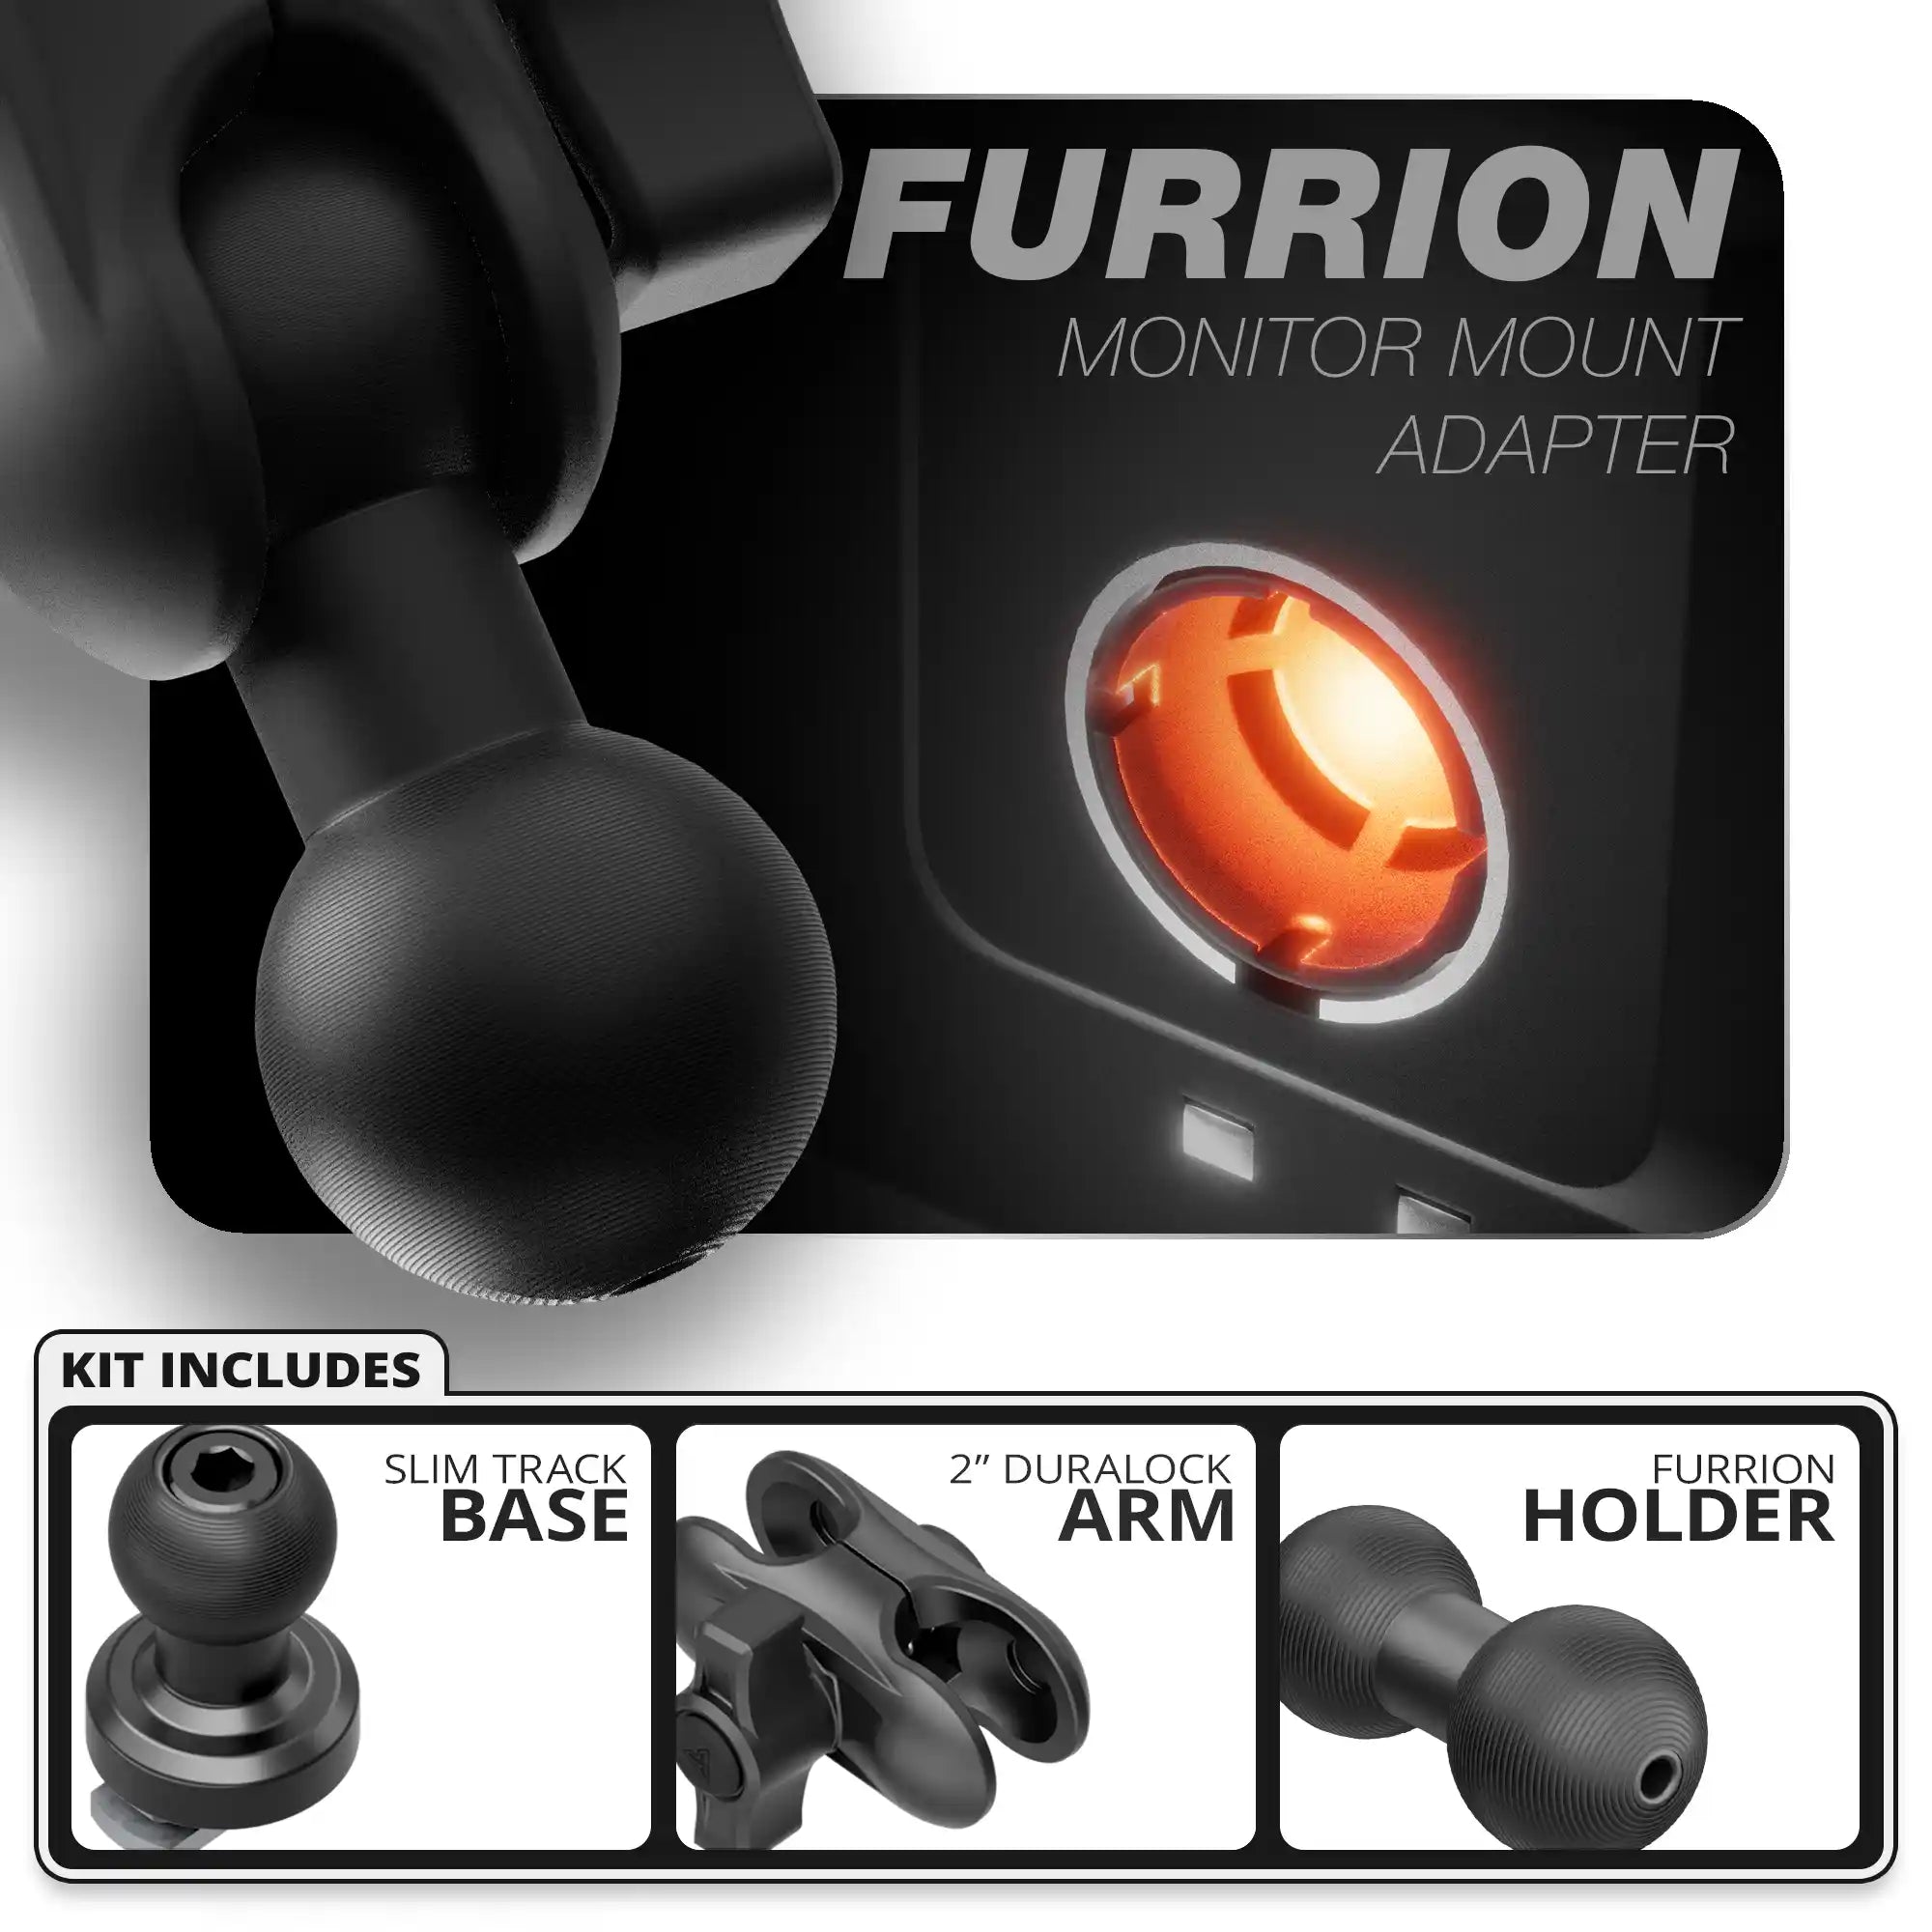 Furrion | Slim Track Base | 2" DuraLock Arm